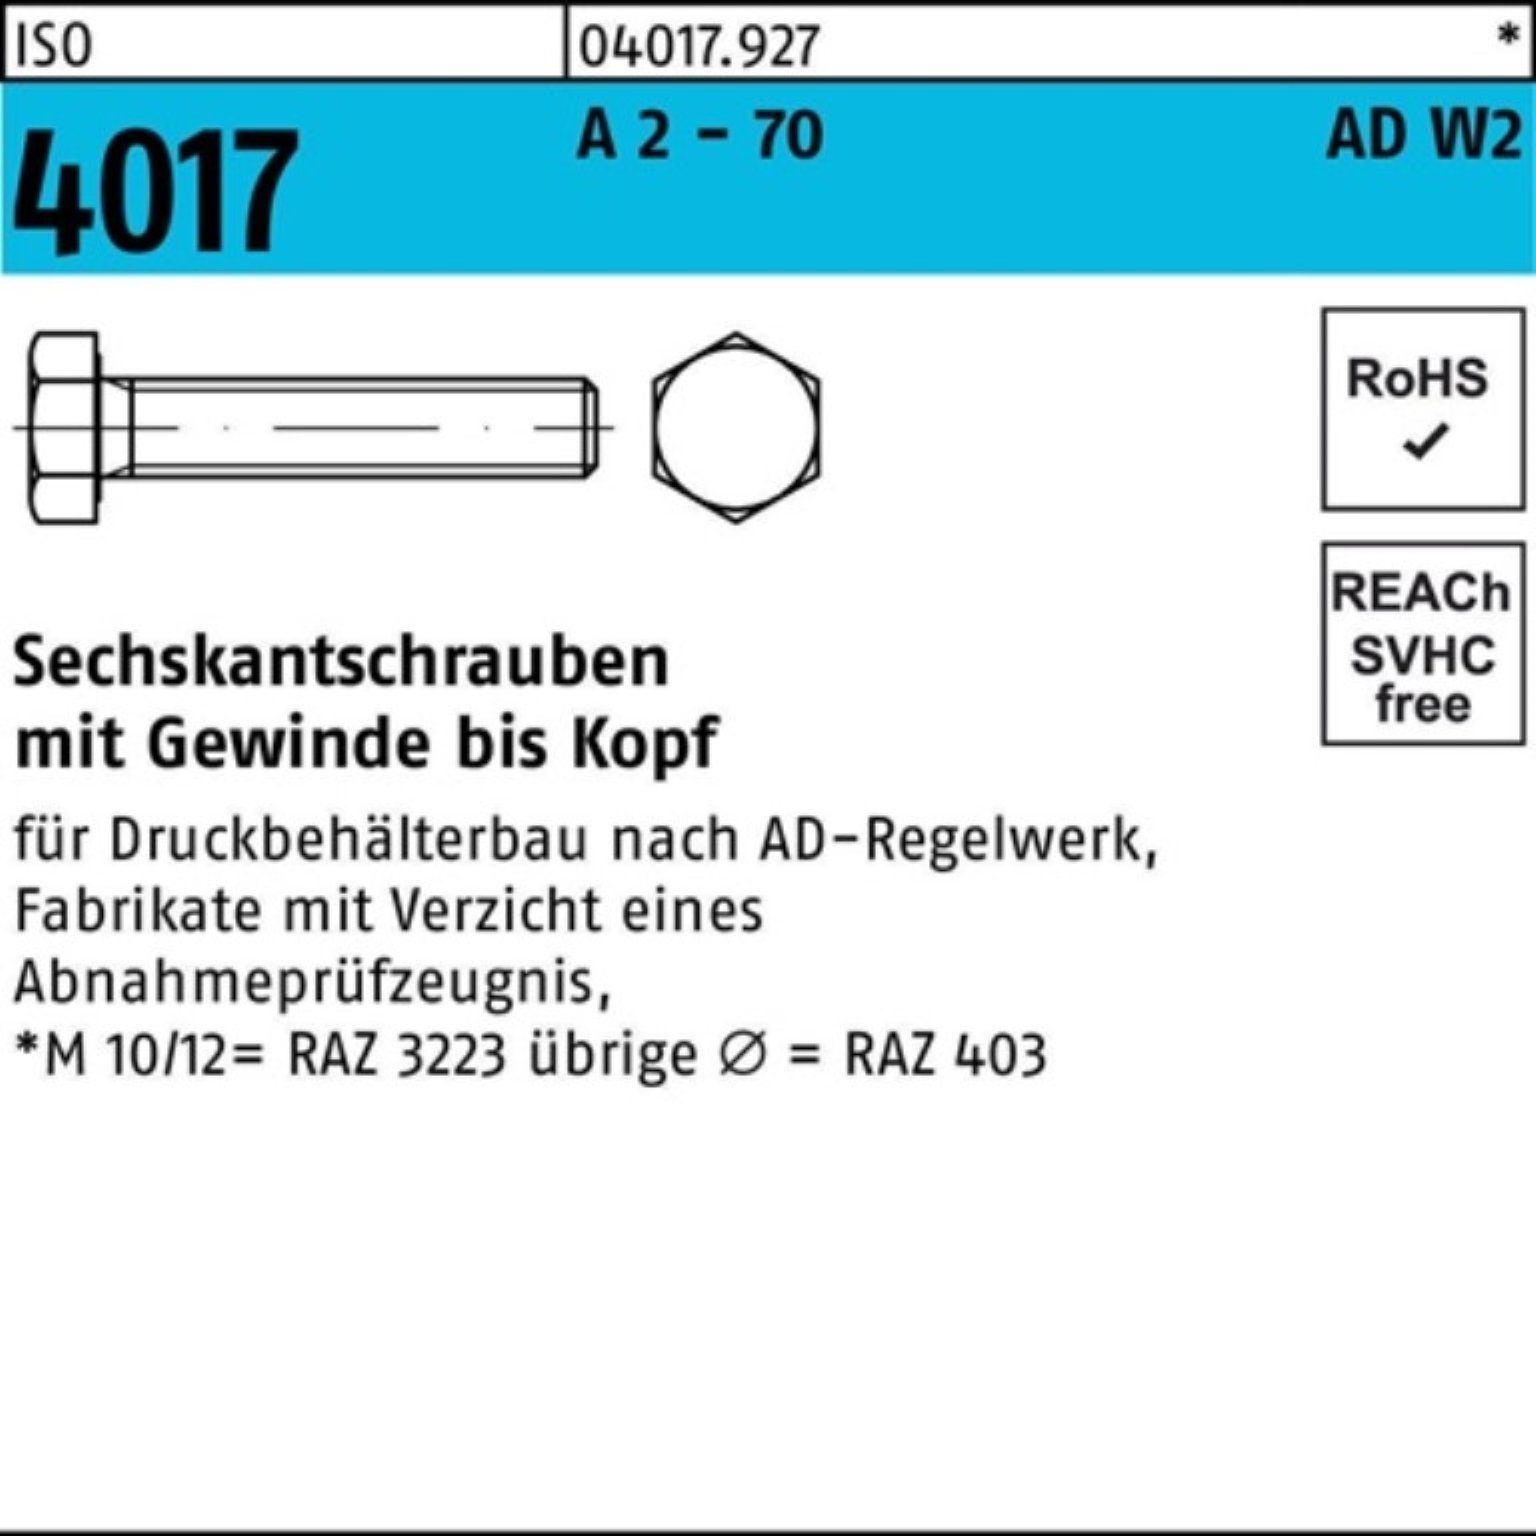 Bufab Sechskantschraube 100er Pack Sechskantschraube ISO 4017 VG M10x 50 A 2 - 70 AD-W2 100 St